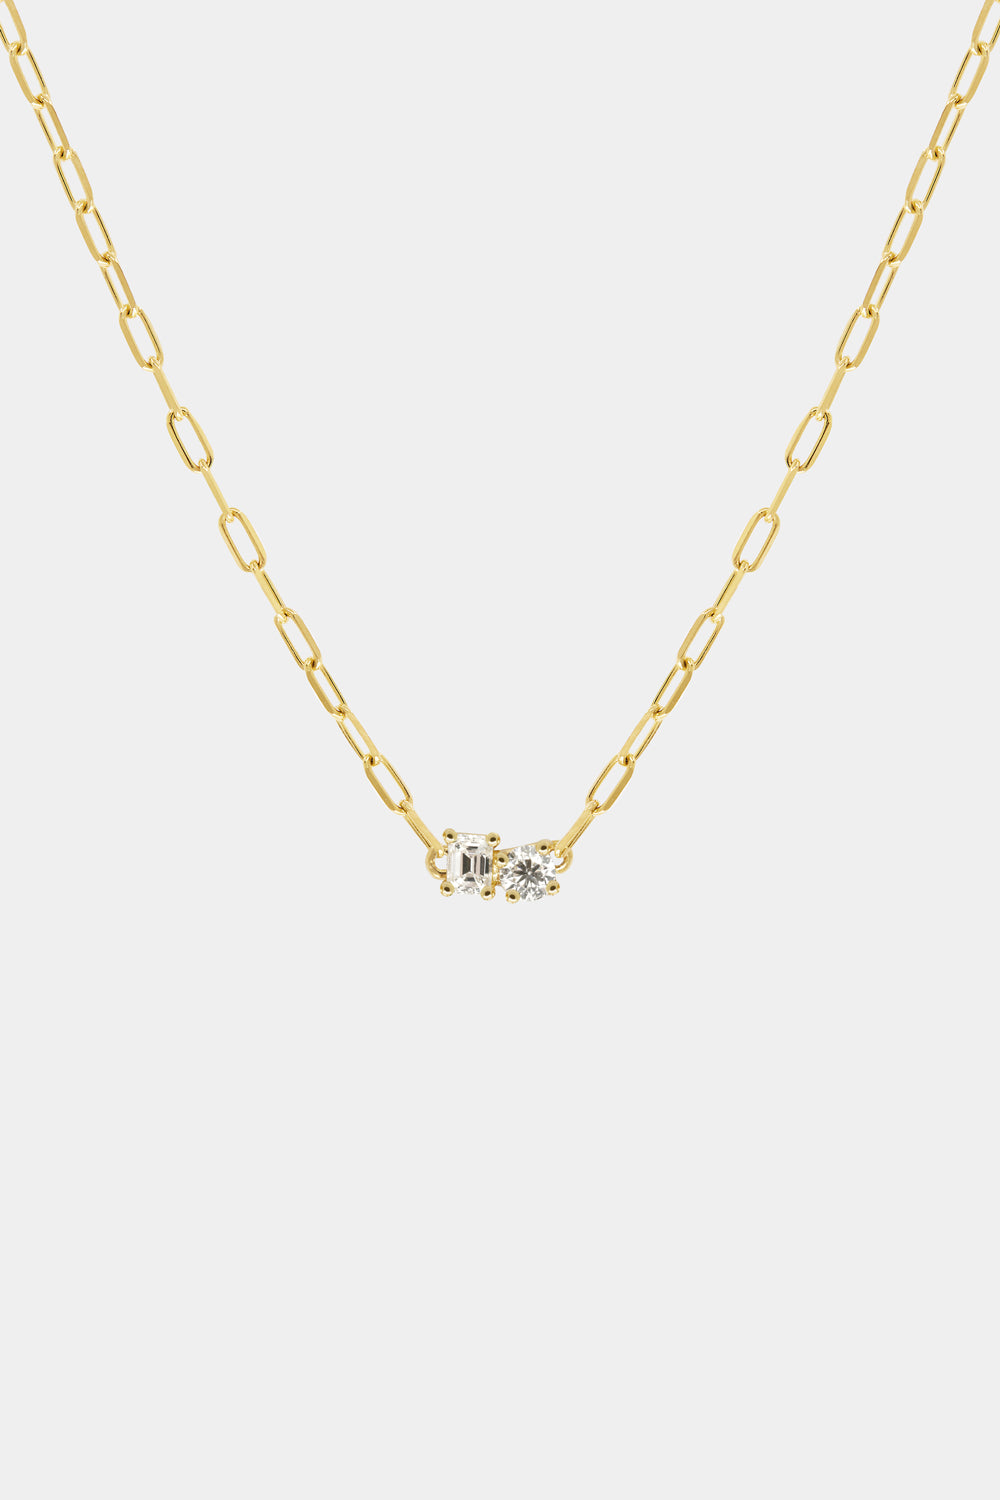 Emerald and Round Diamond Toi Et Moi Necklace | 18K Yellow Gold